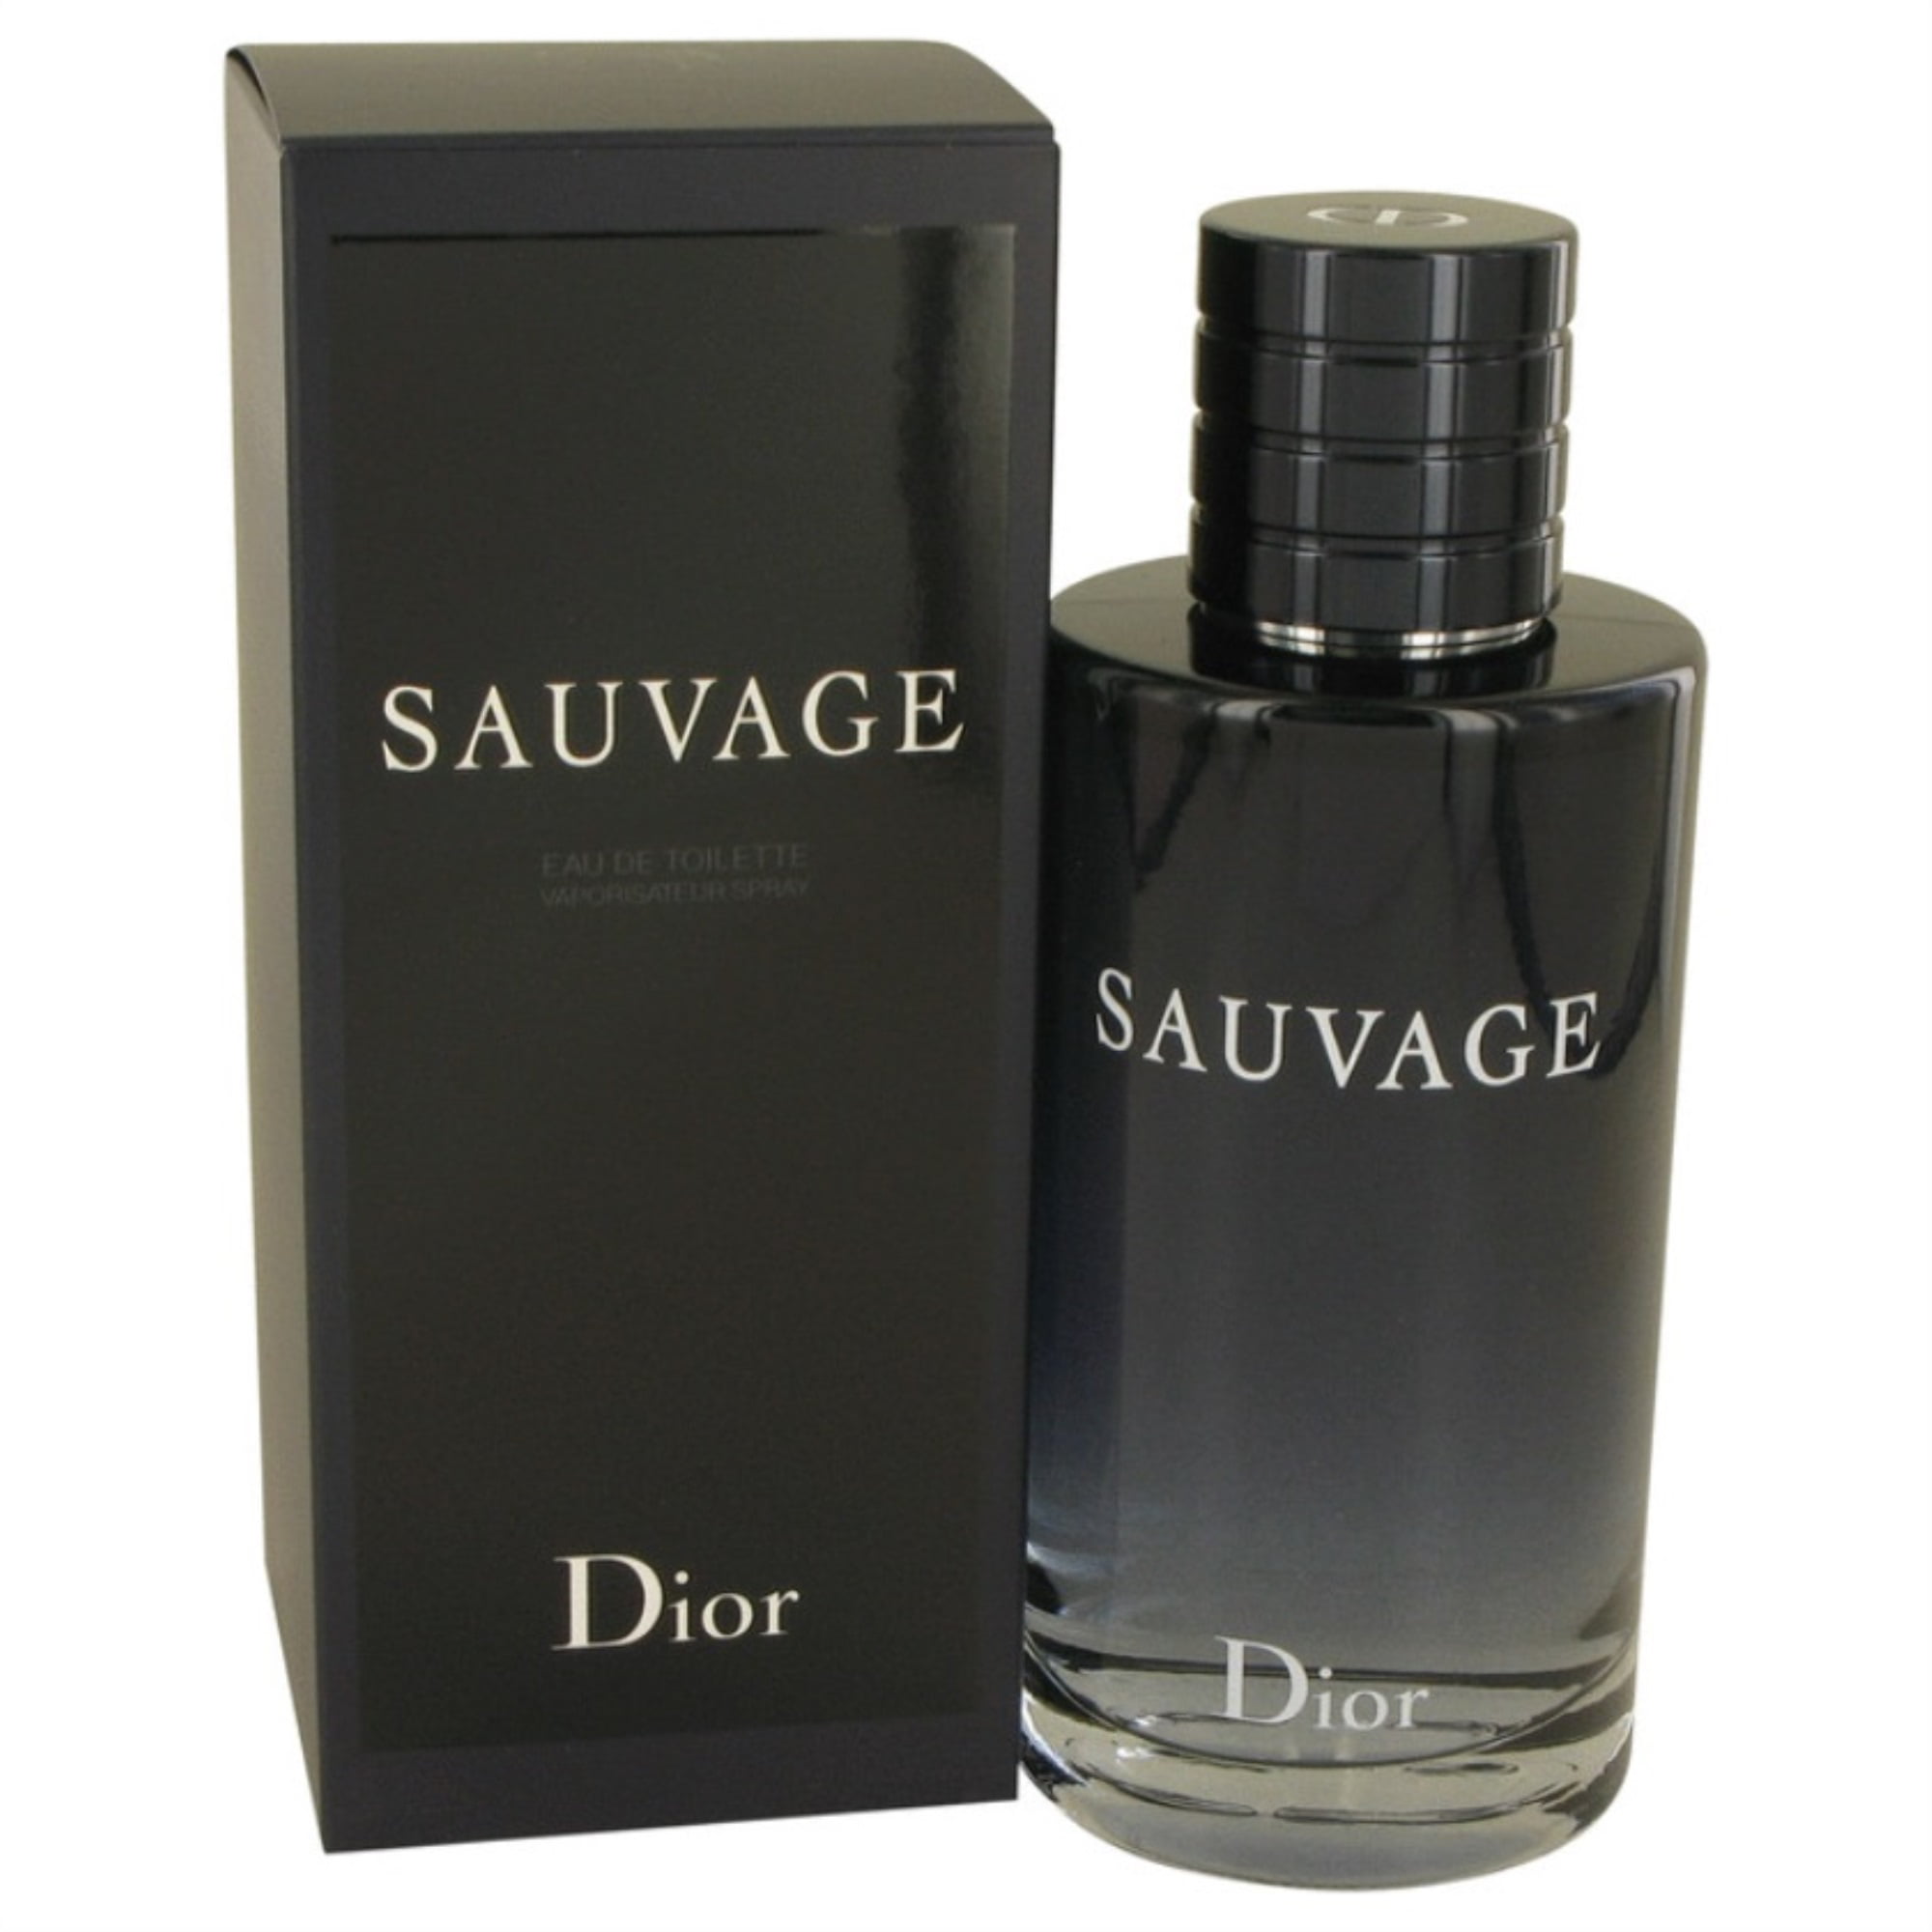 Buy Dior Eau Sauvage Cologne  Turkey